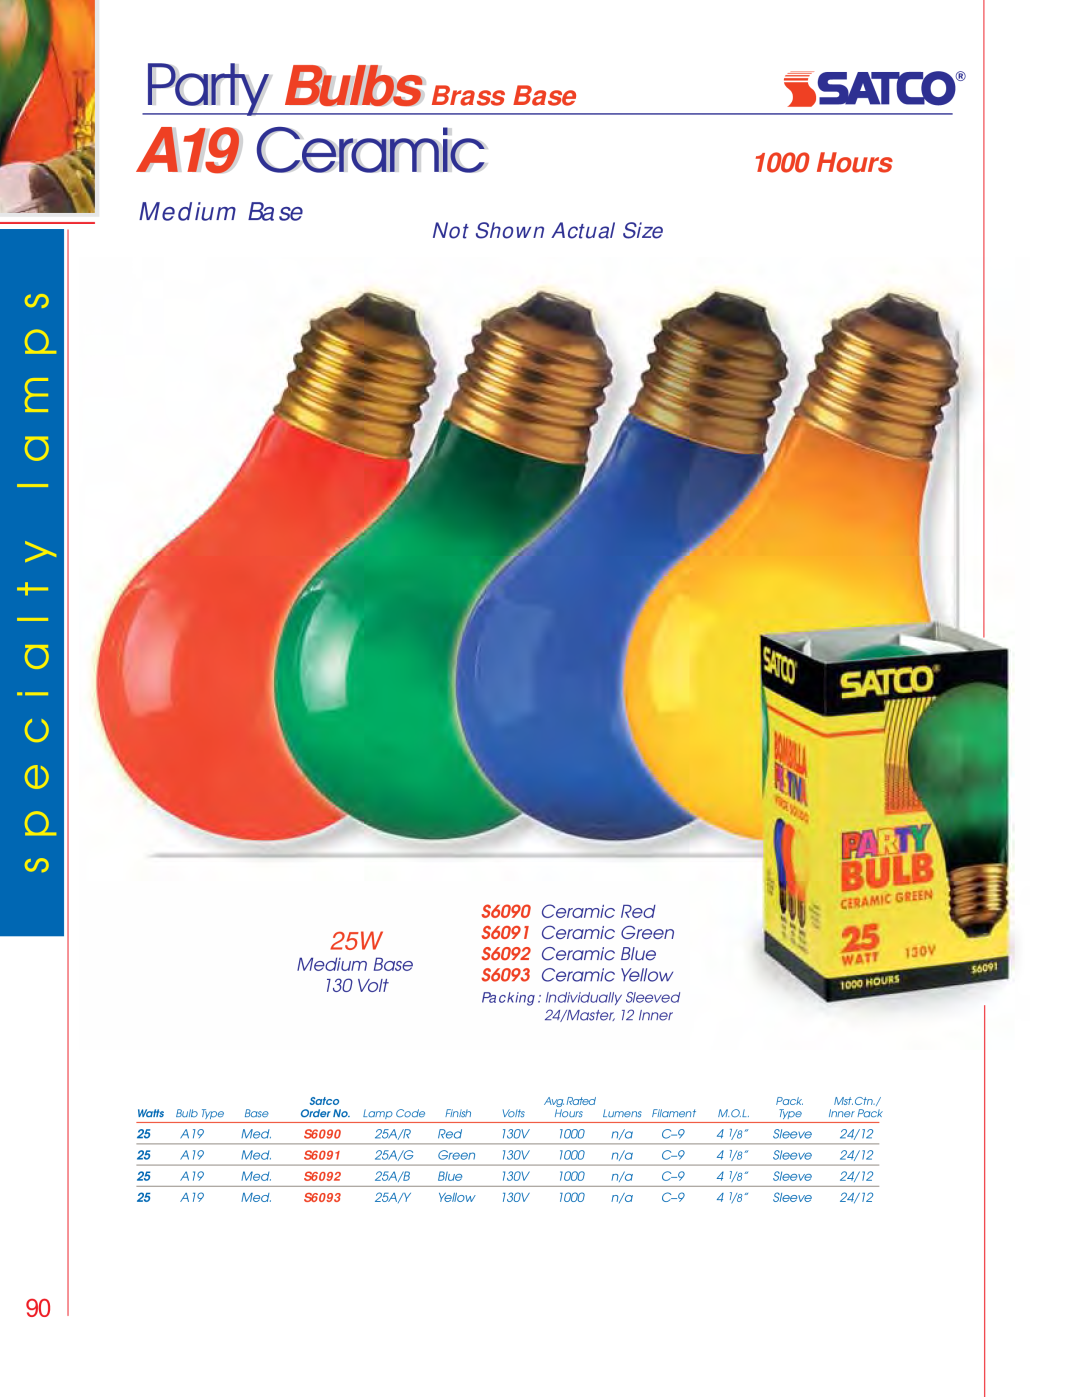 Satco Products S3692 s p e c i a l t y l a m p s, Party Bulbs Brass Base, Hours, A19 Ceramicic, Medium Base, S6090, S6091 